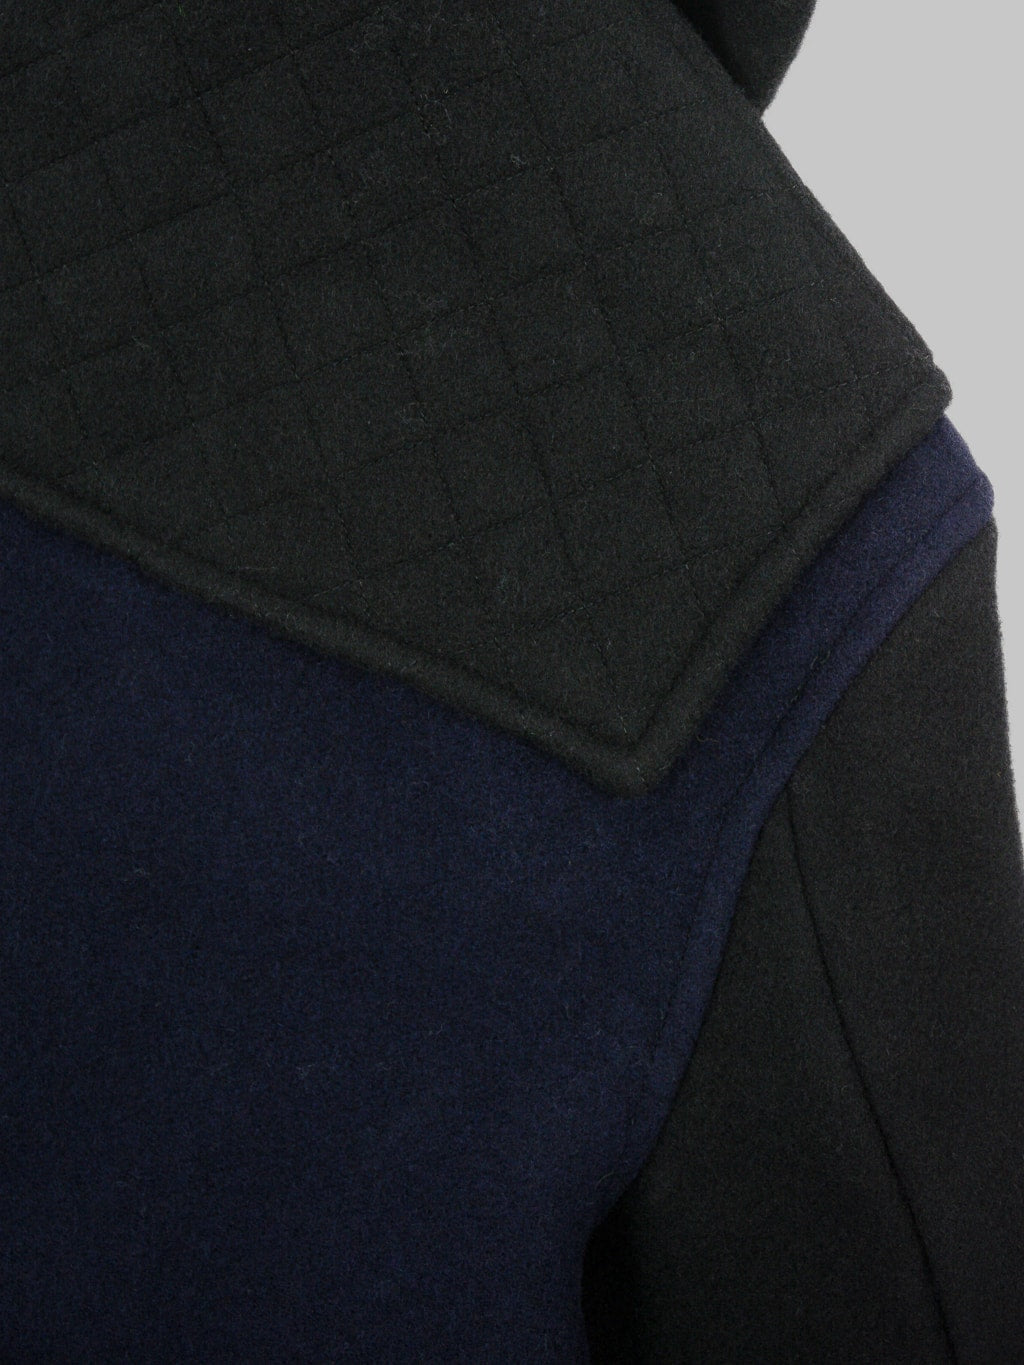 3sixteen x Gloverall Monty Duffle Coat black navy shoulder cape